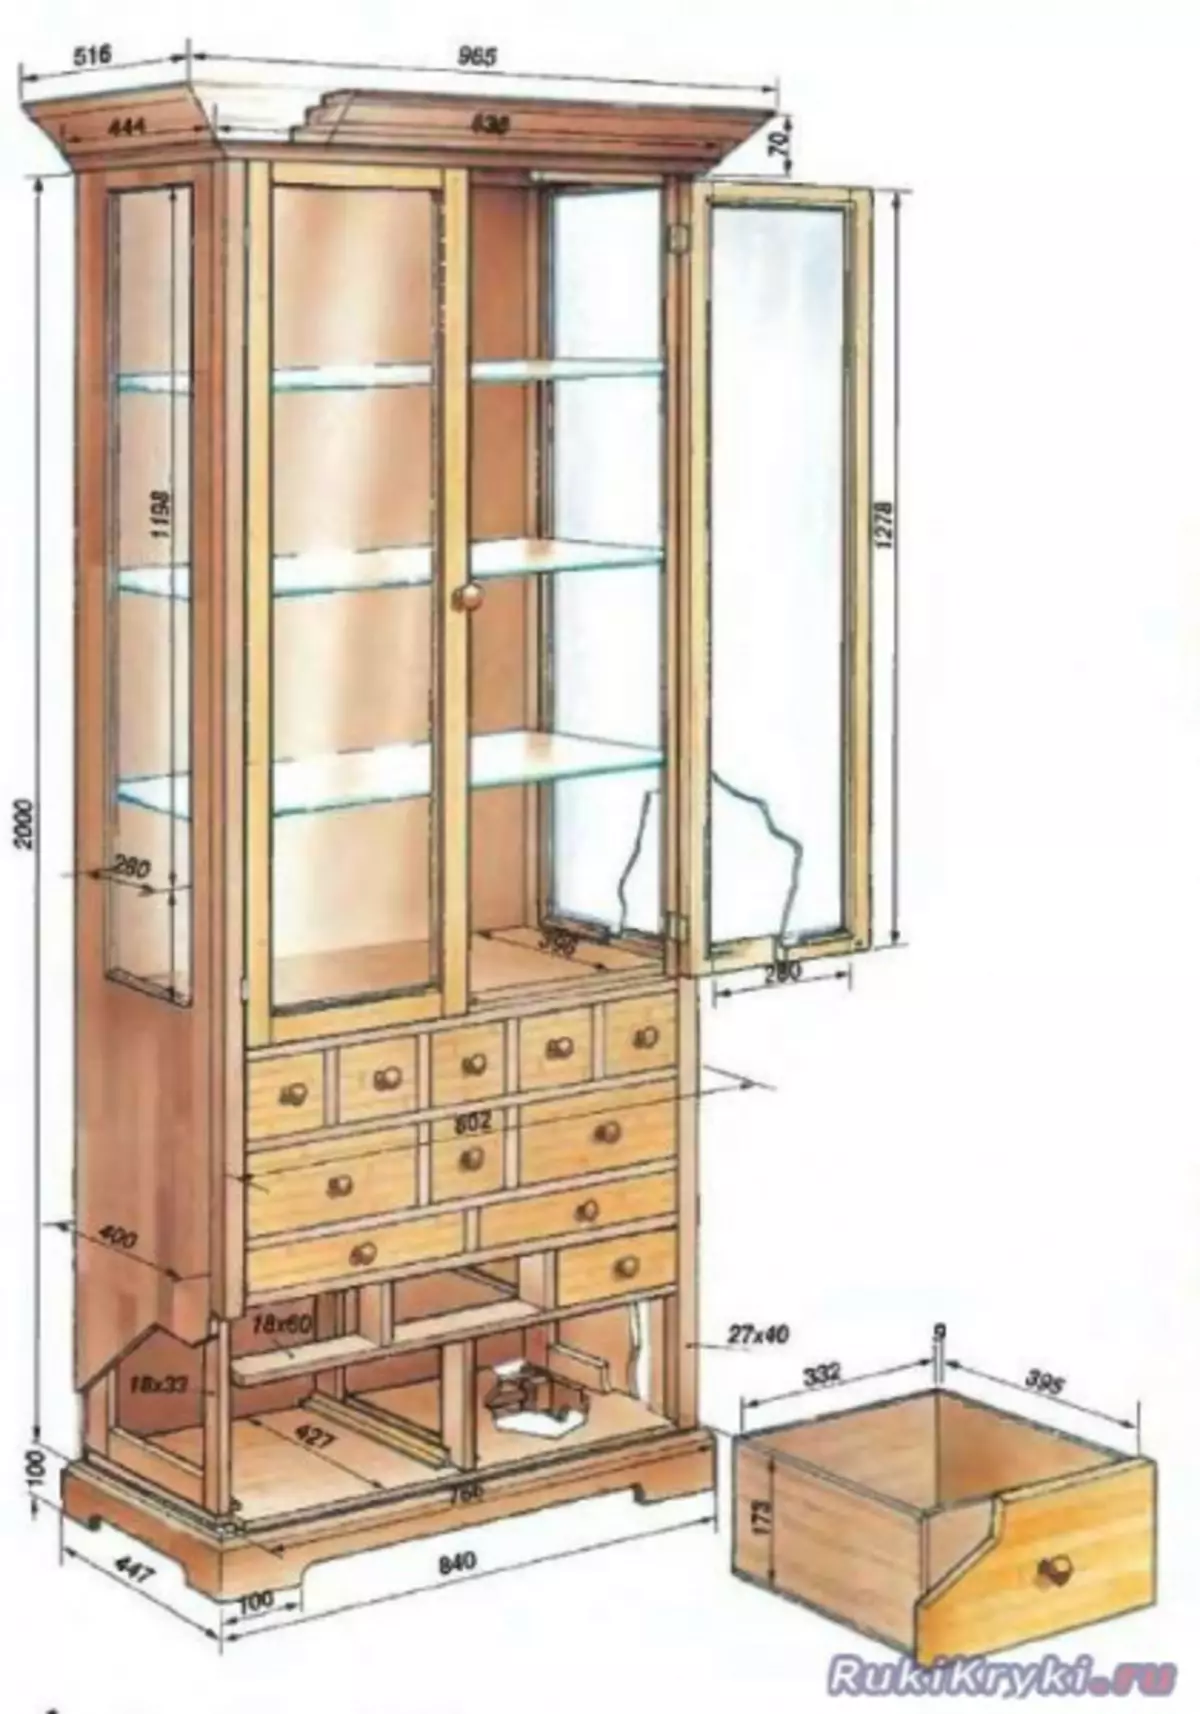 Сборка книжного шкафа. Шкафчик из дерева. Шкаф витрина. Сборка деревянного шкафа. Конструкция мебели.